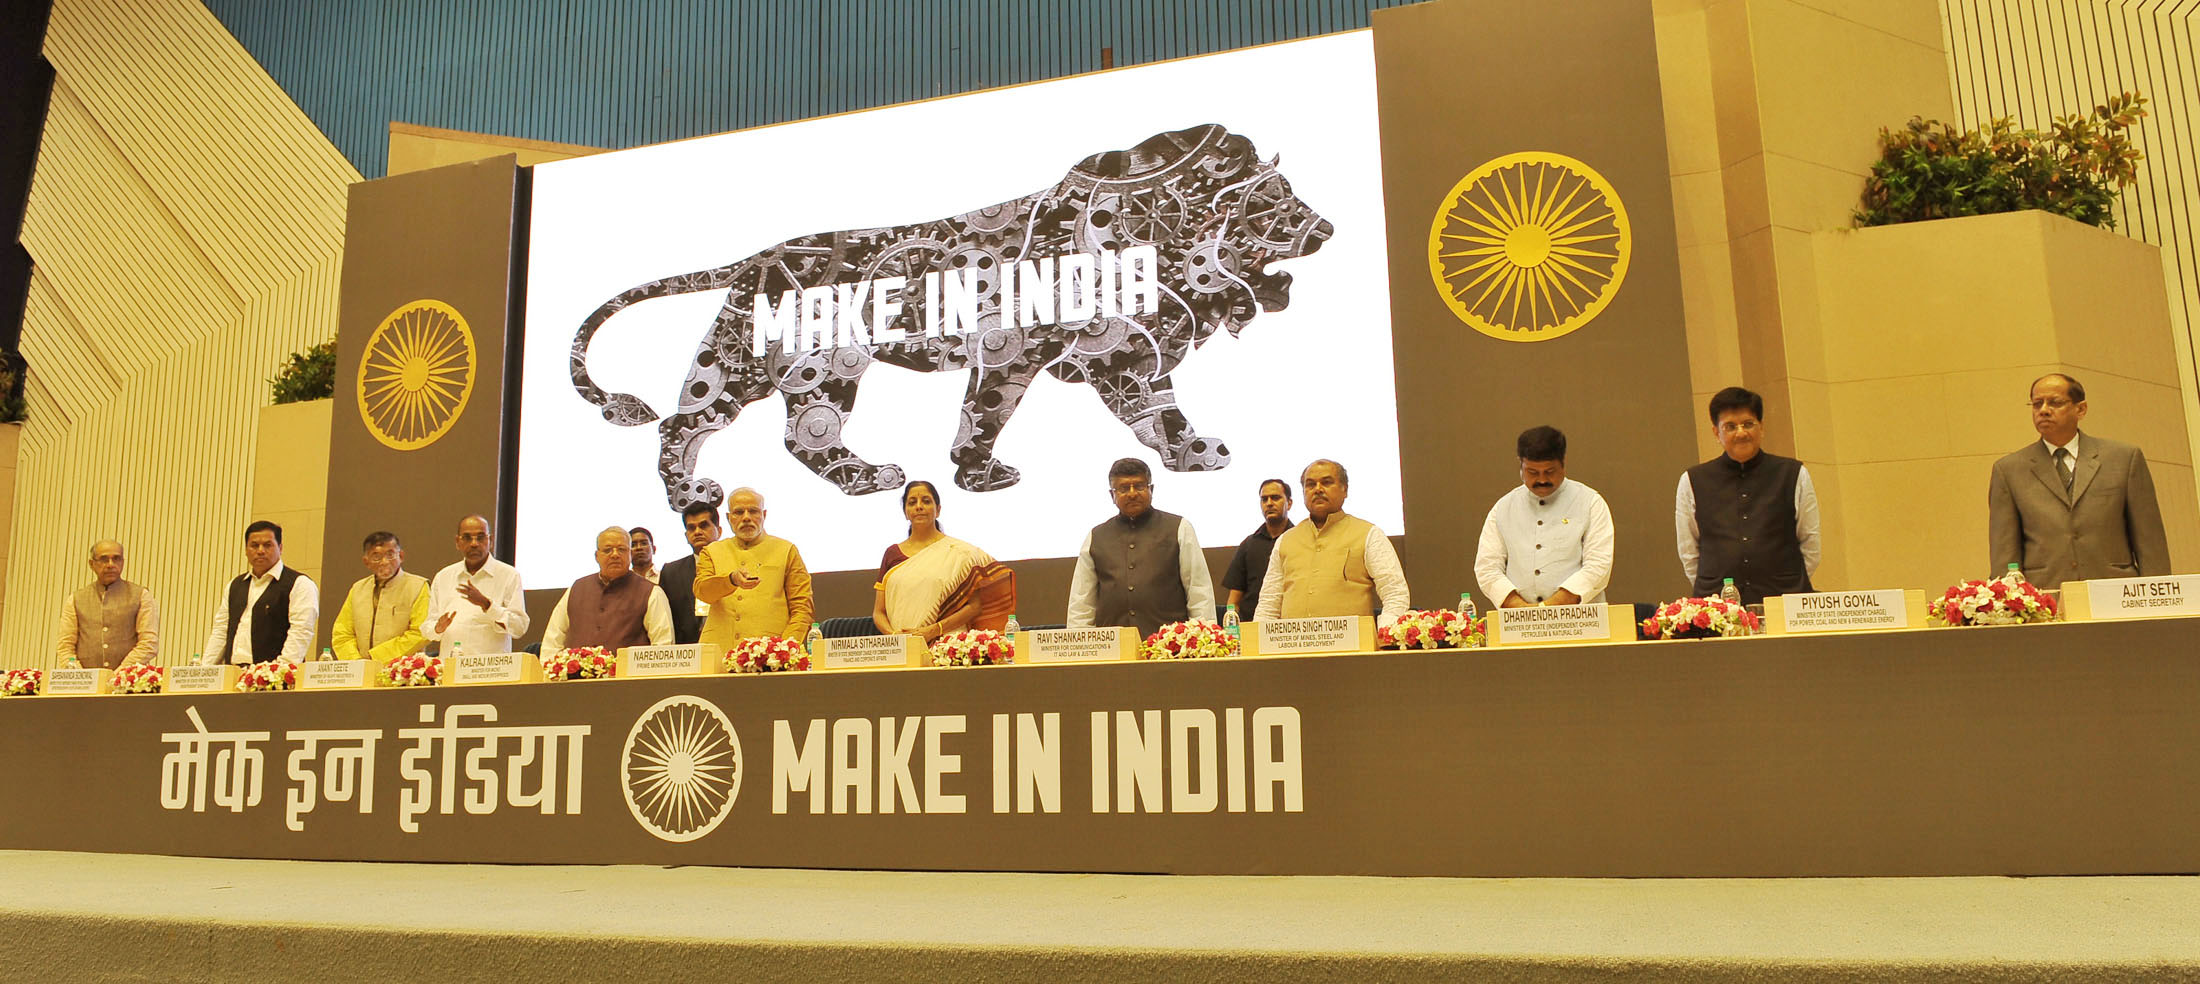 PM launches “Make in India” global initiative